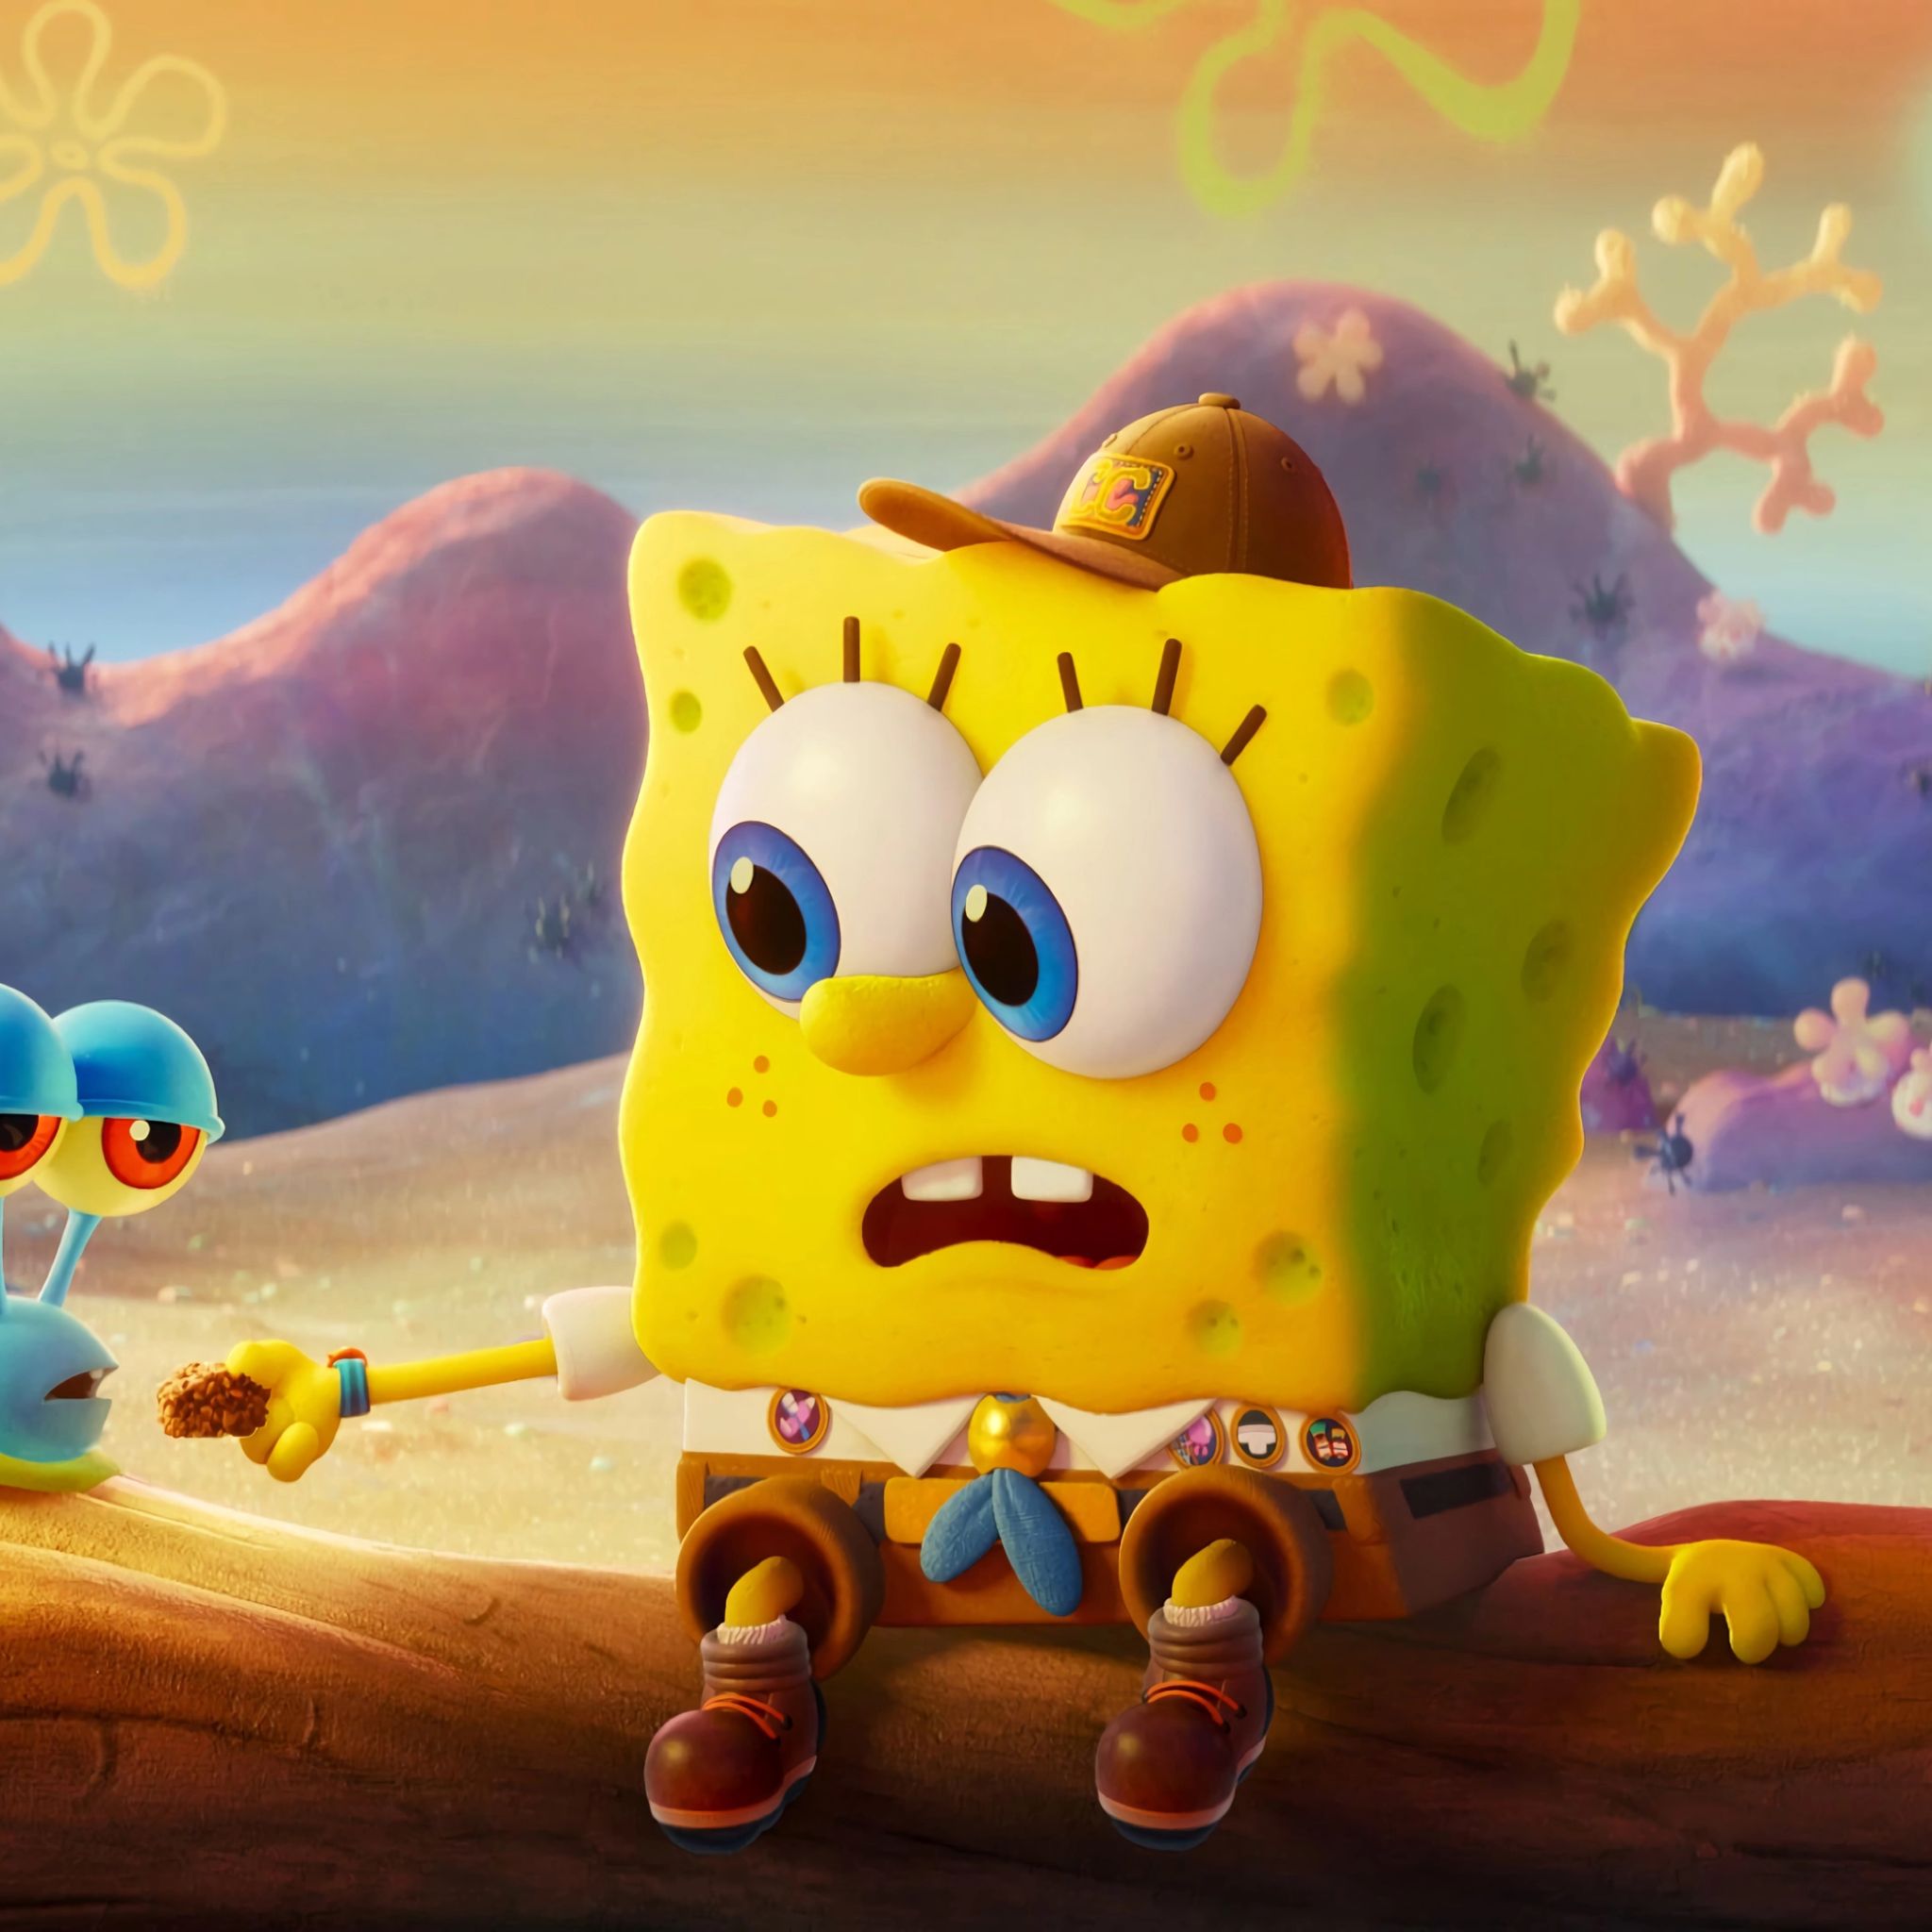 Gary & SpongeBob iPad Air Wallpaper, HD Movies 4K Wallpaper, Image, Photo and Background